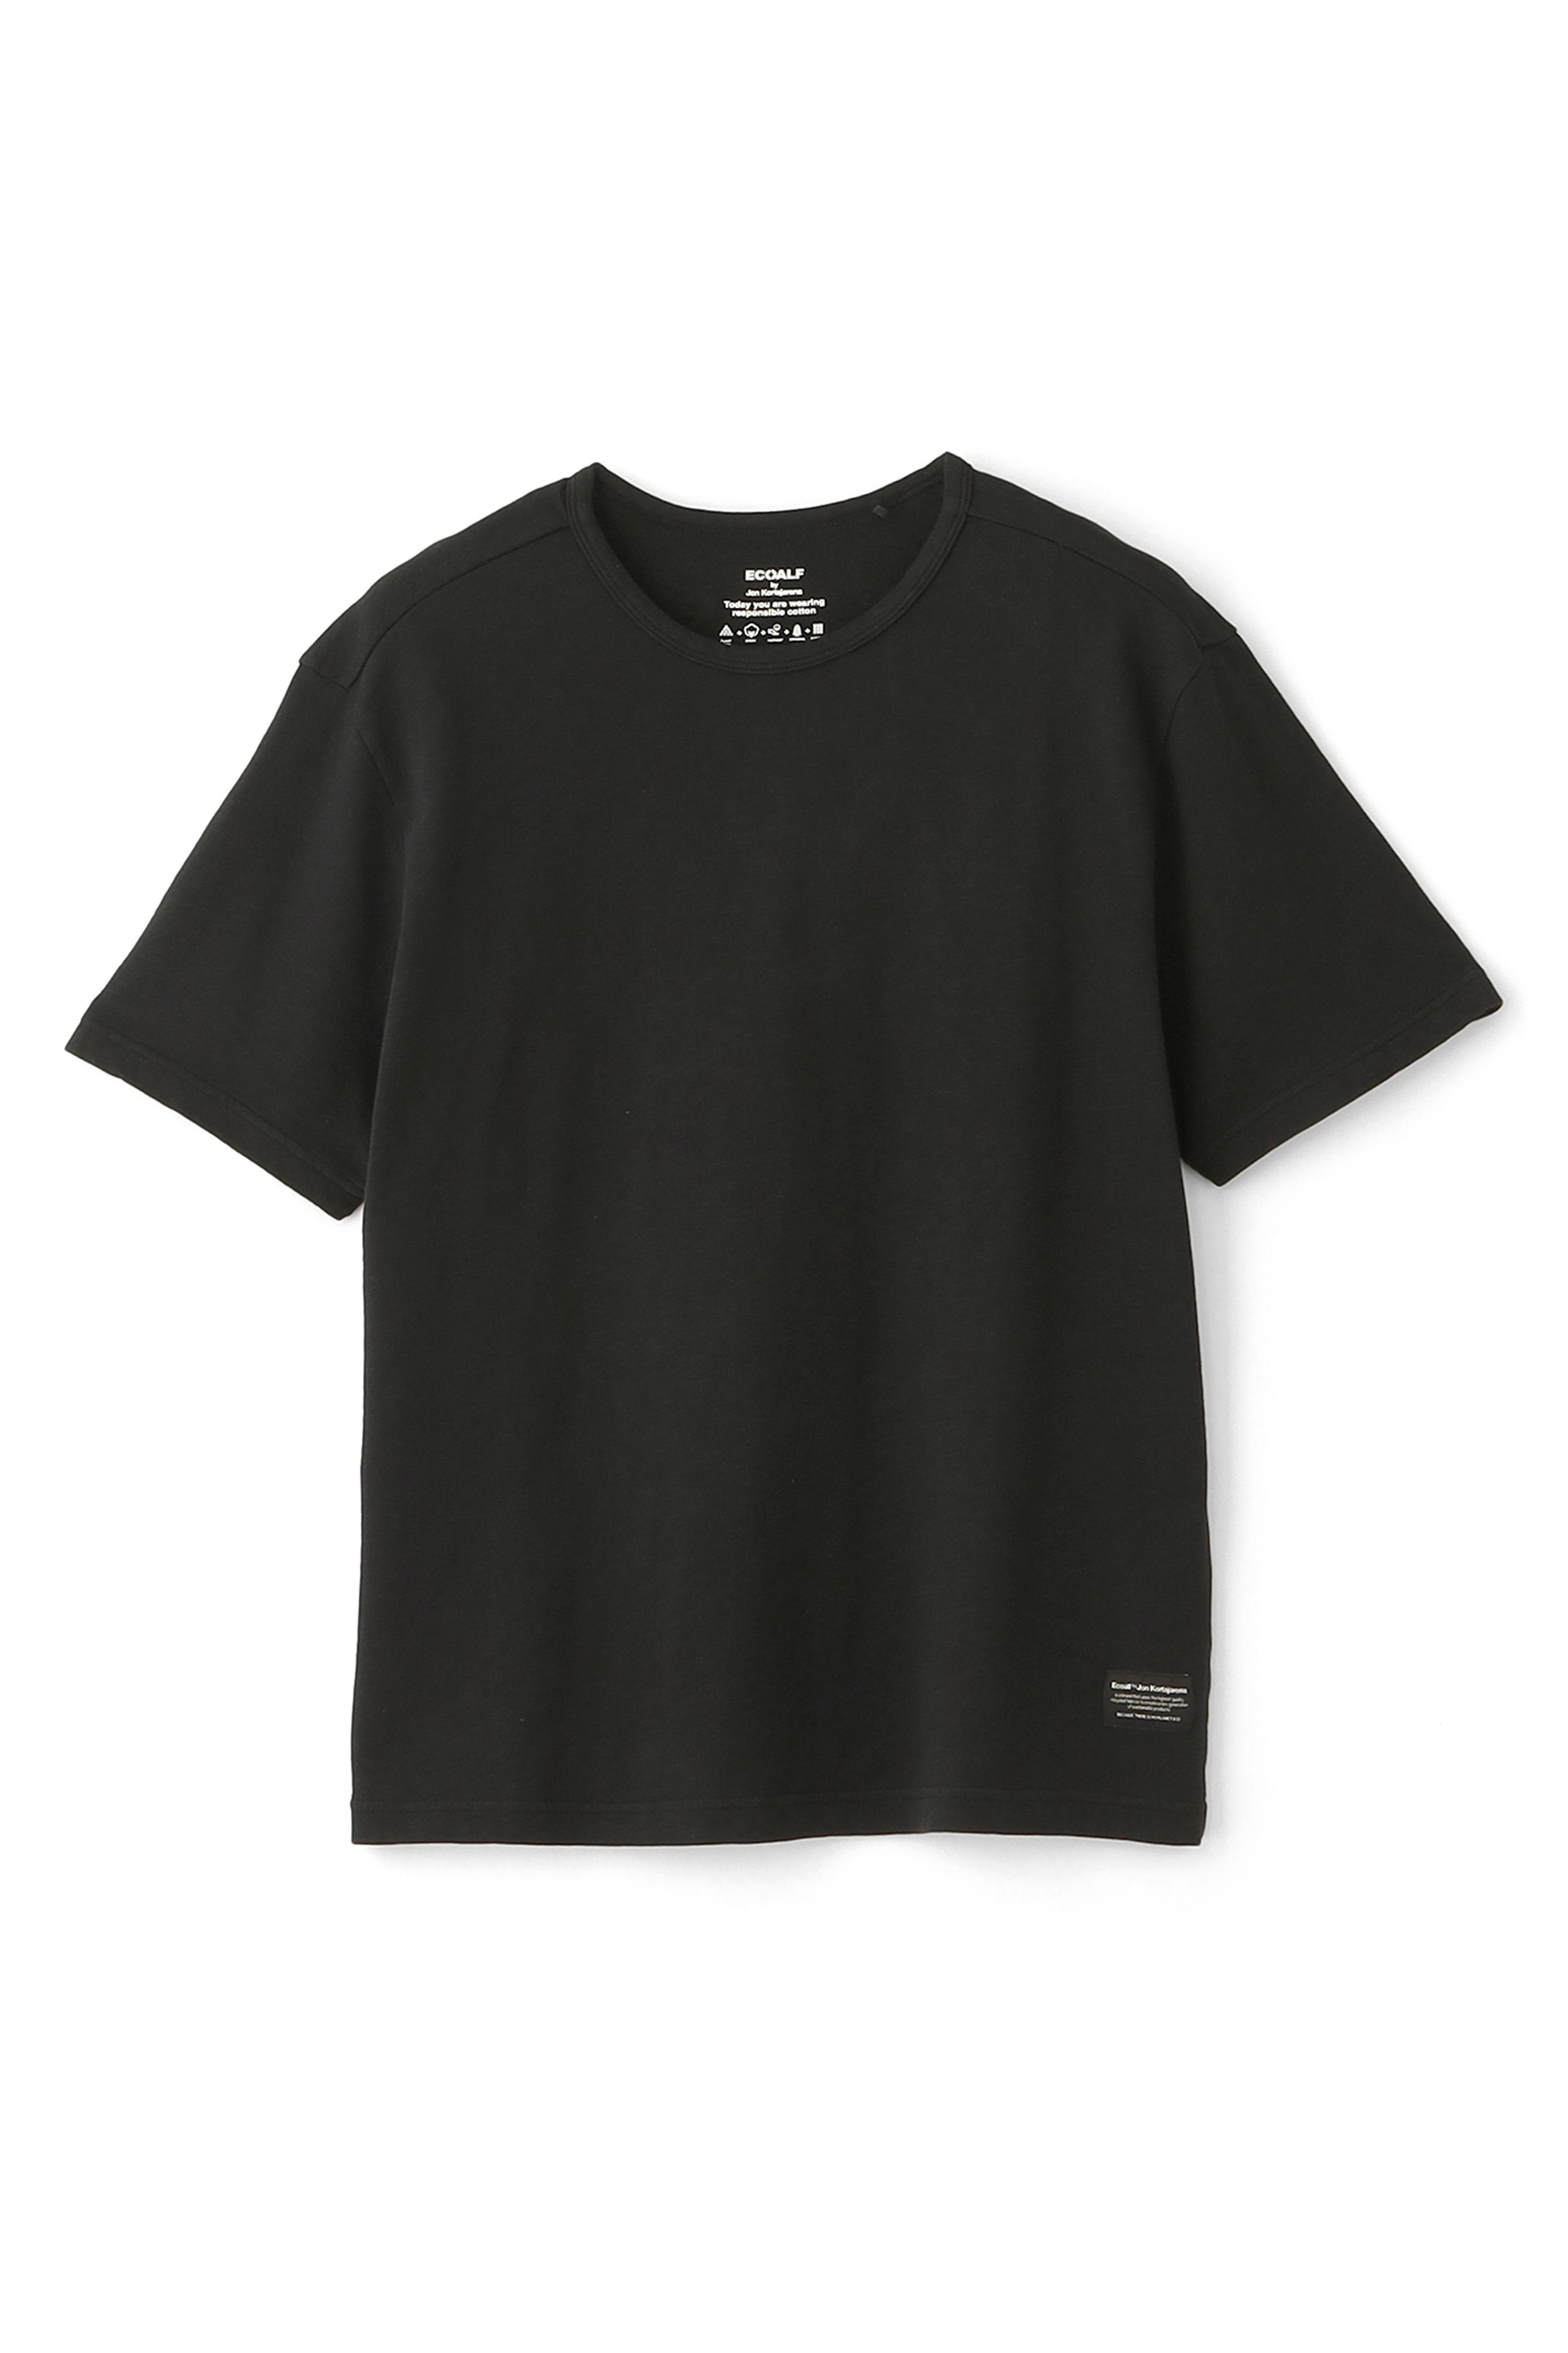 ＜ELLE SHOP＞ ECOALF 【MEN】【LIMITED】TENESERA メッセージ Tシャツ / TENESERA T-SHIRT UNISEX (ブラック M) エコアルフ ELLE SHOP画像